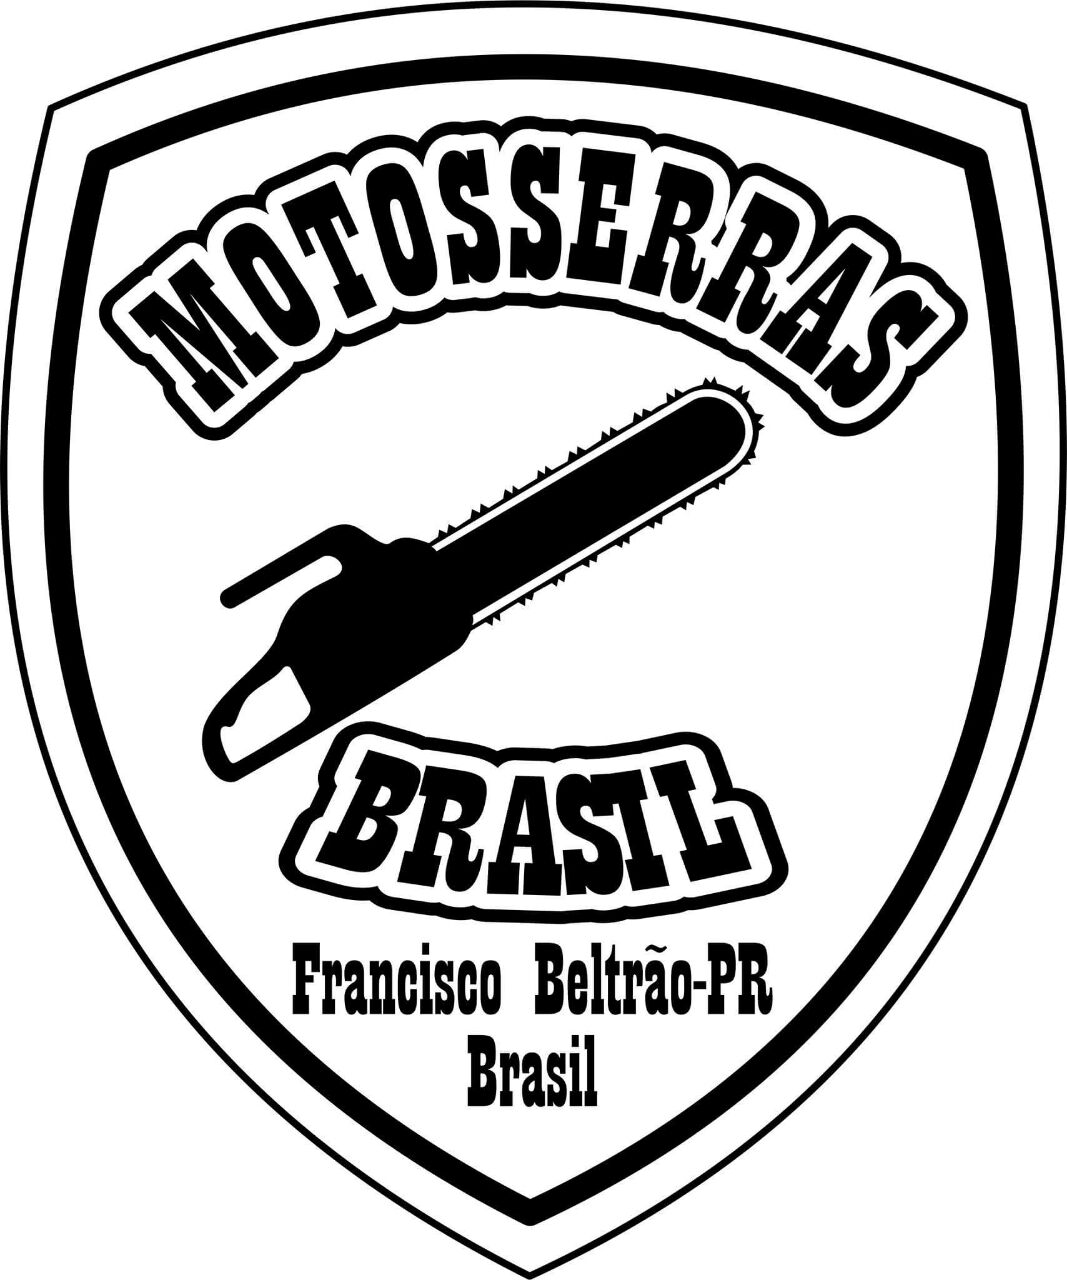 Motosserras Logo